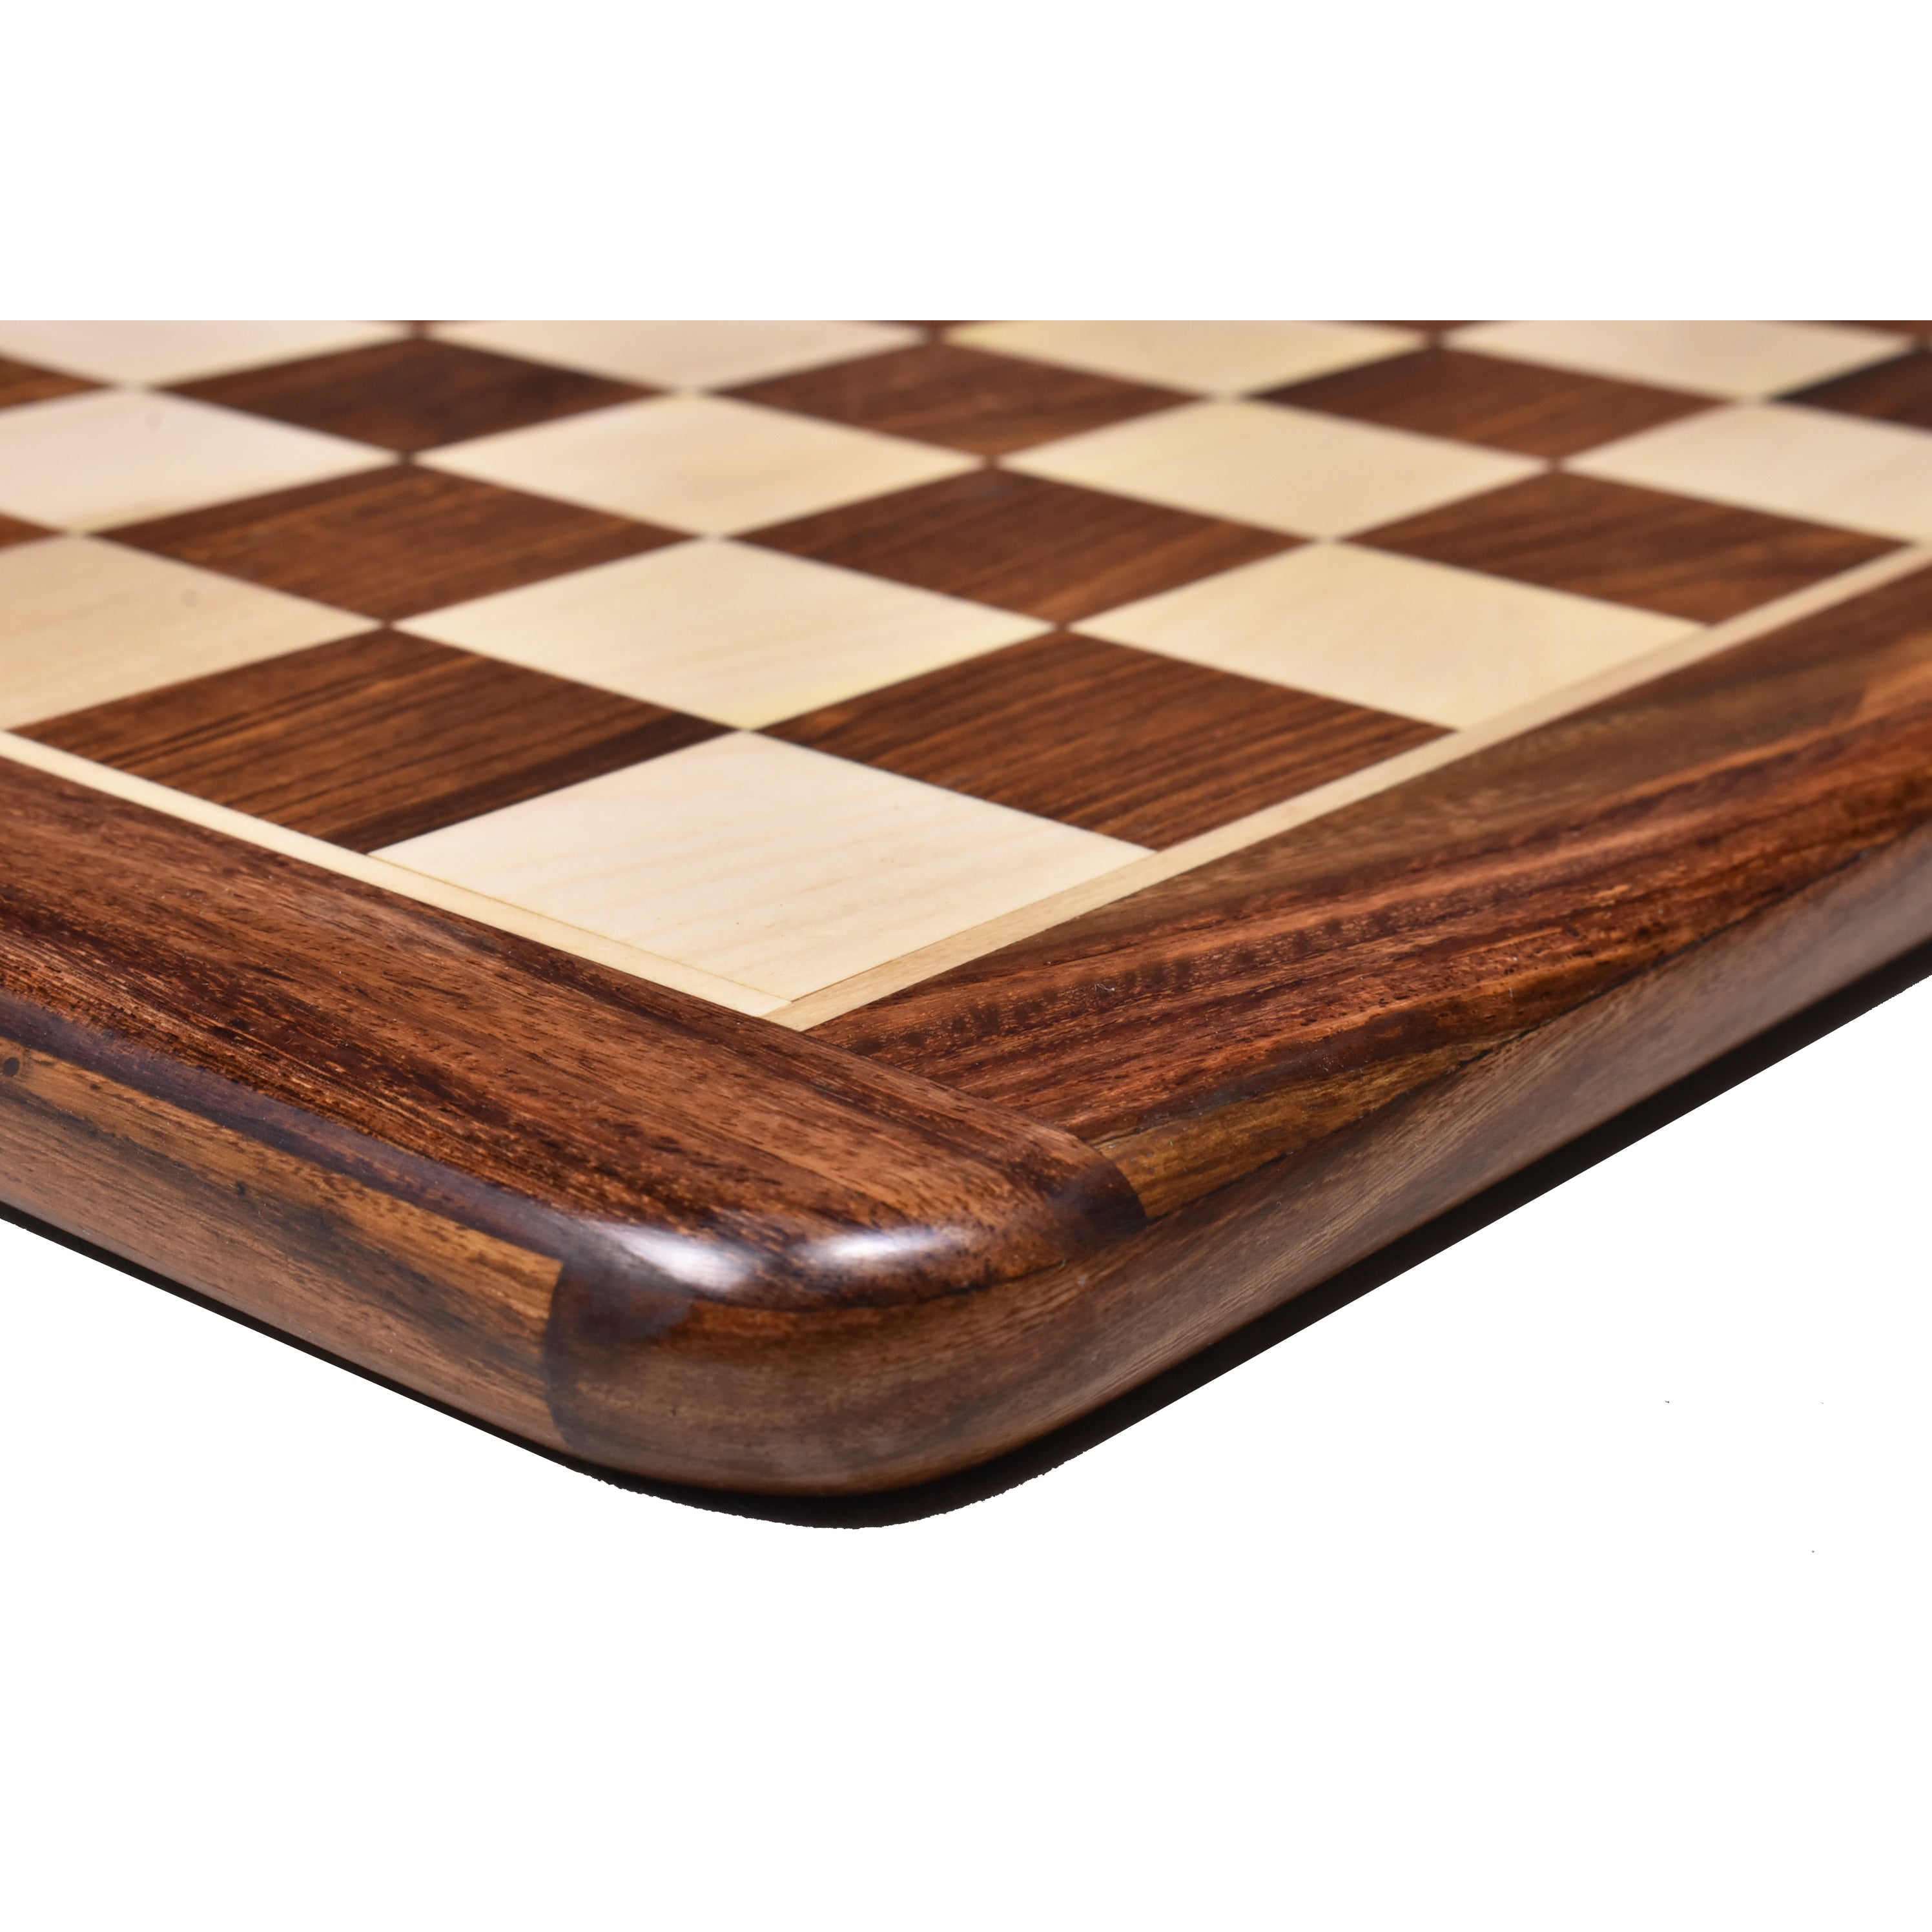 21 Large Chess board - Golden Rosewood & Maple - Algebraic Notations –  royalchessmall